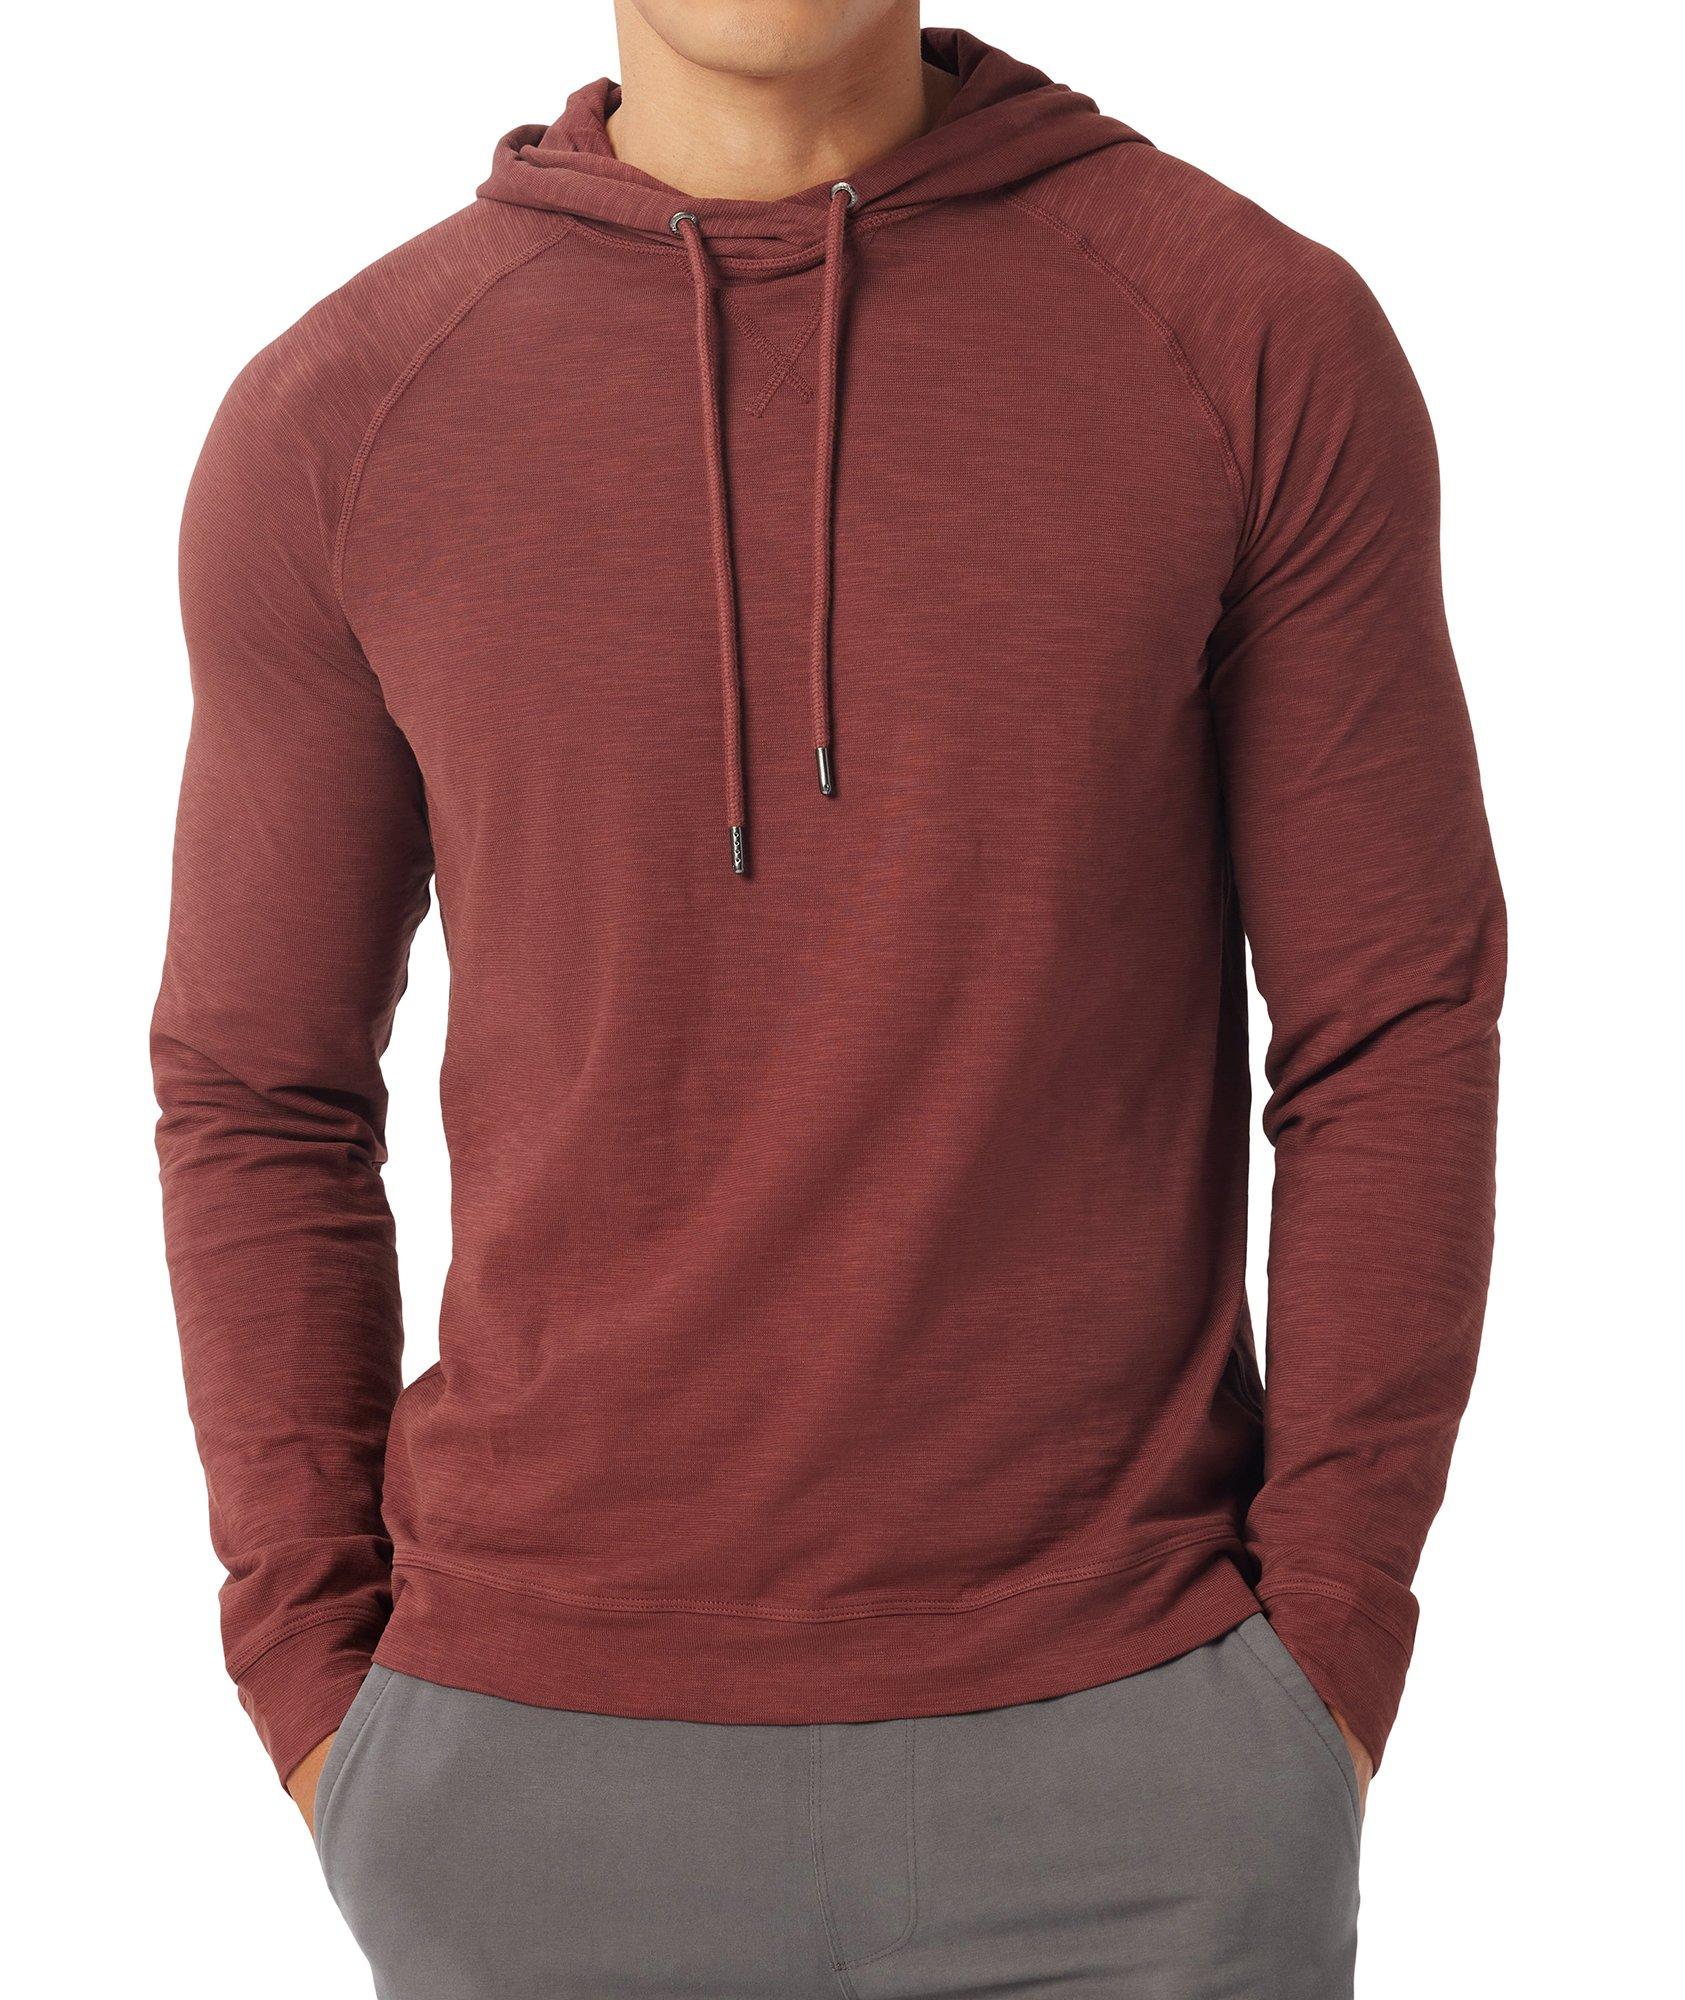 Long-Sleeve Soft Slub Hooded Sweater image 2